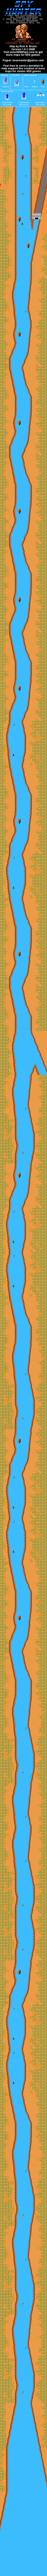 Spy Hunter - Water Area - Nintendo NES Map